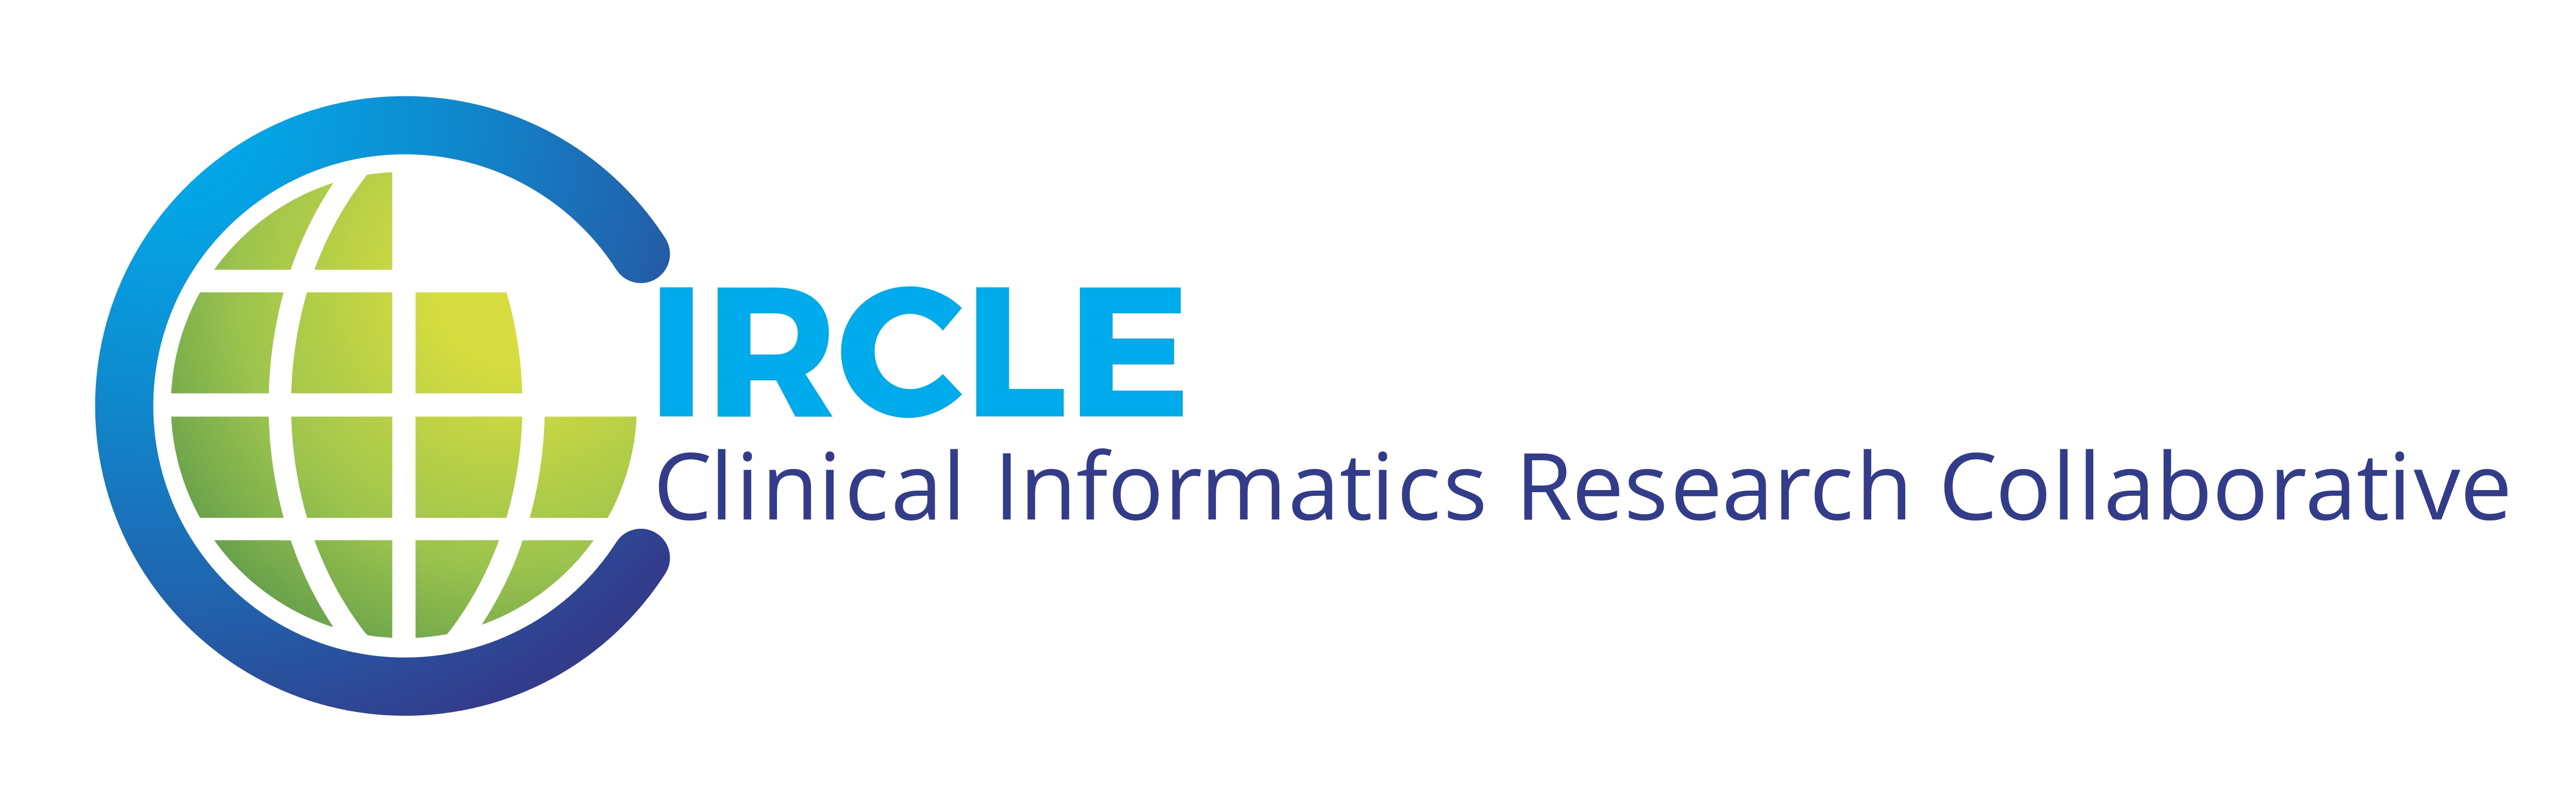 (c) Circleinformatics.org